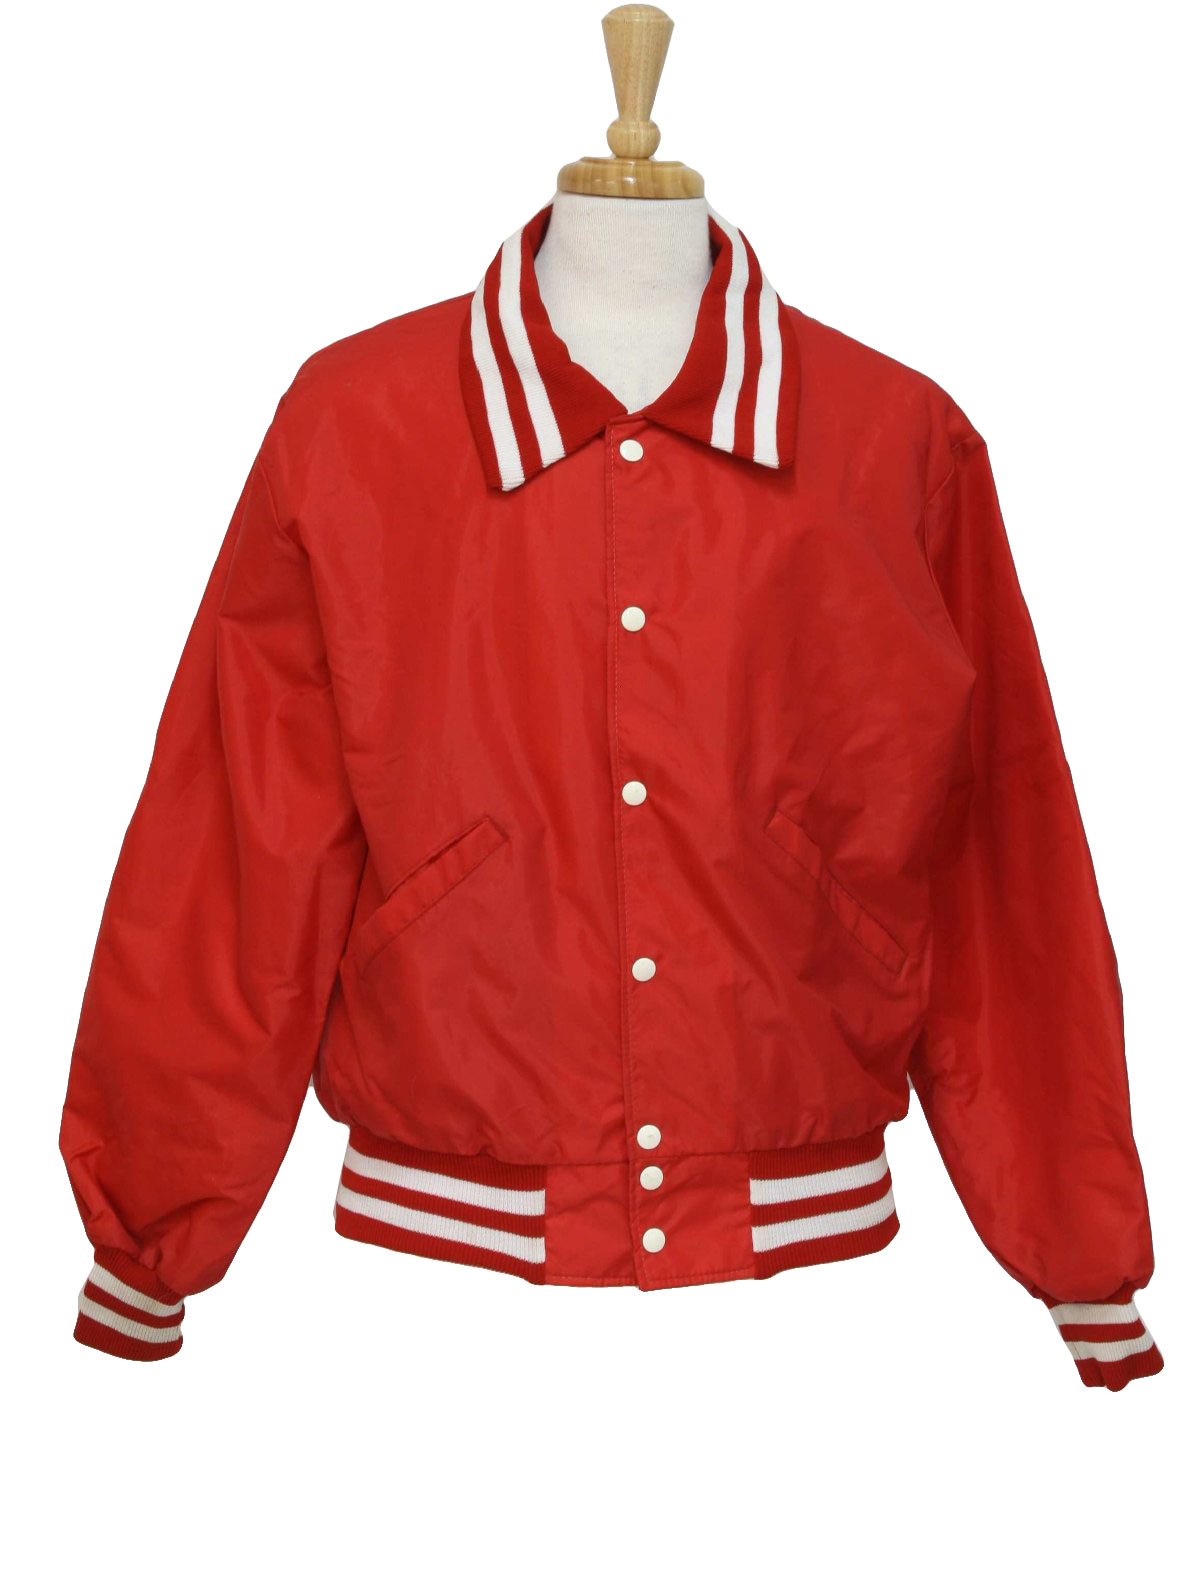 Retro 70s Jacket (DeLong) : 70s -DeLong- Mens red nylon with polyester ...